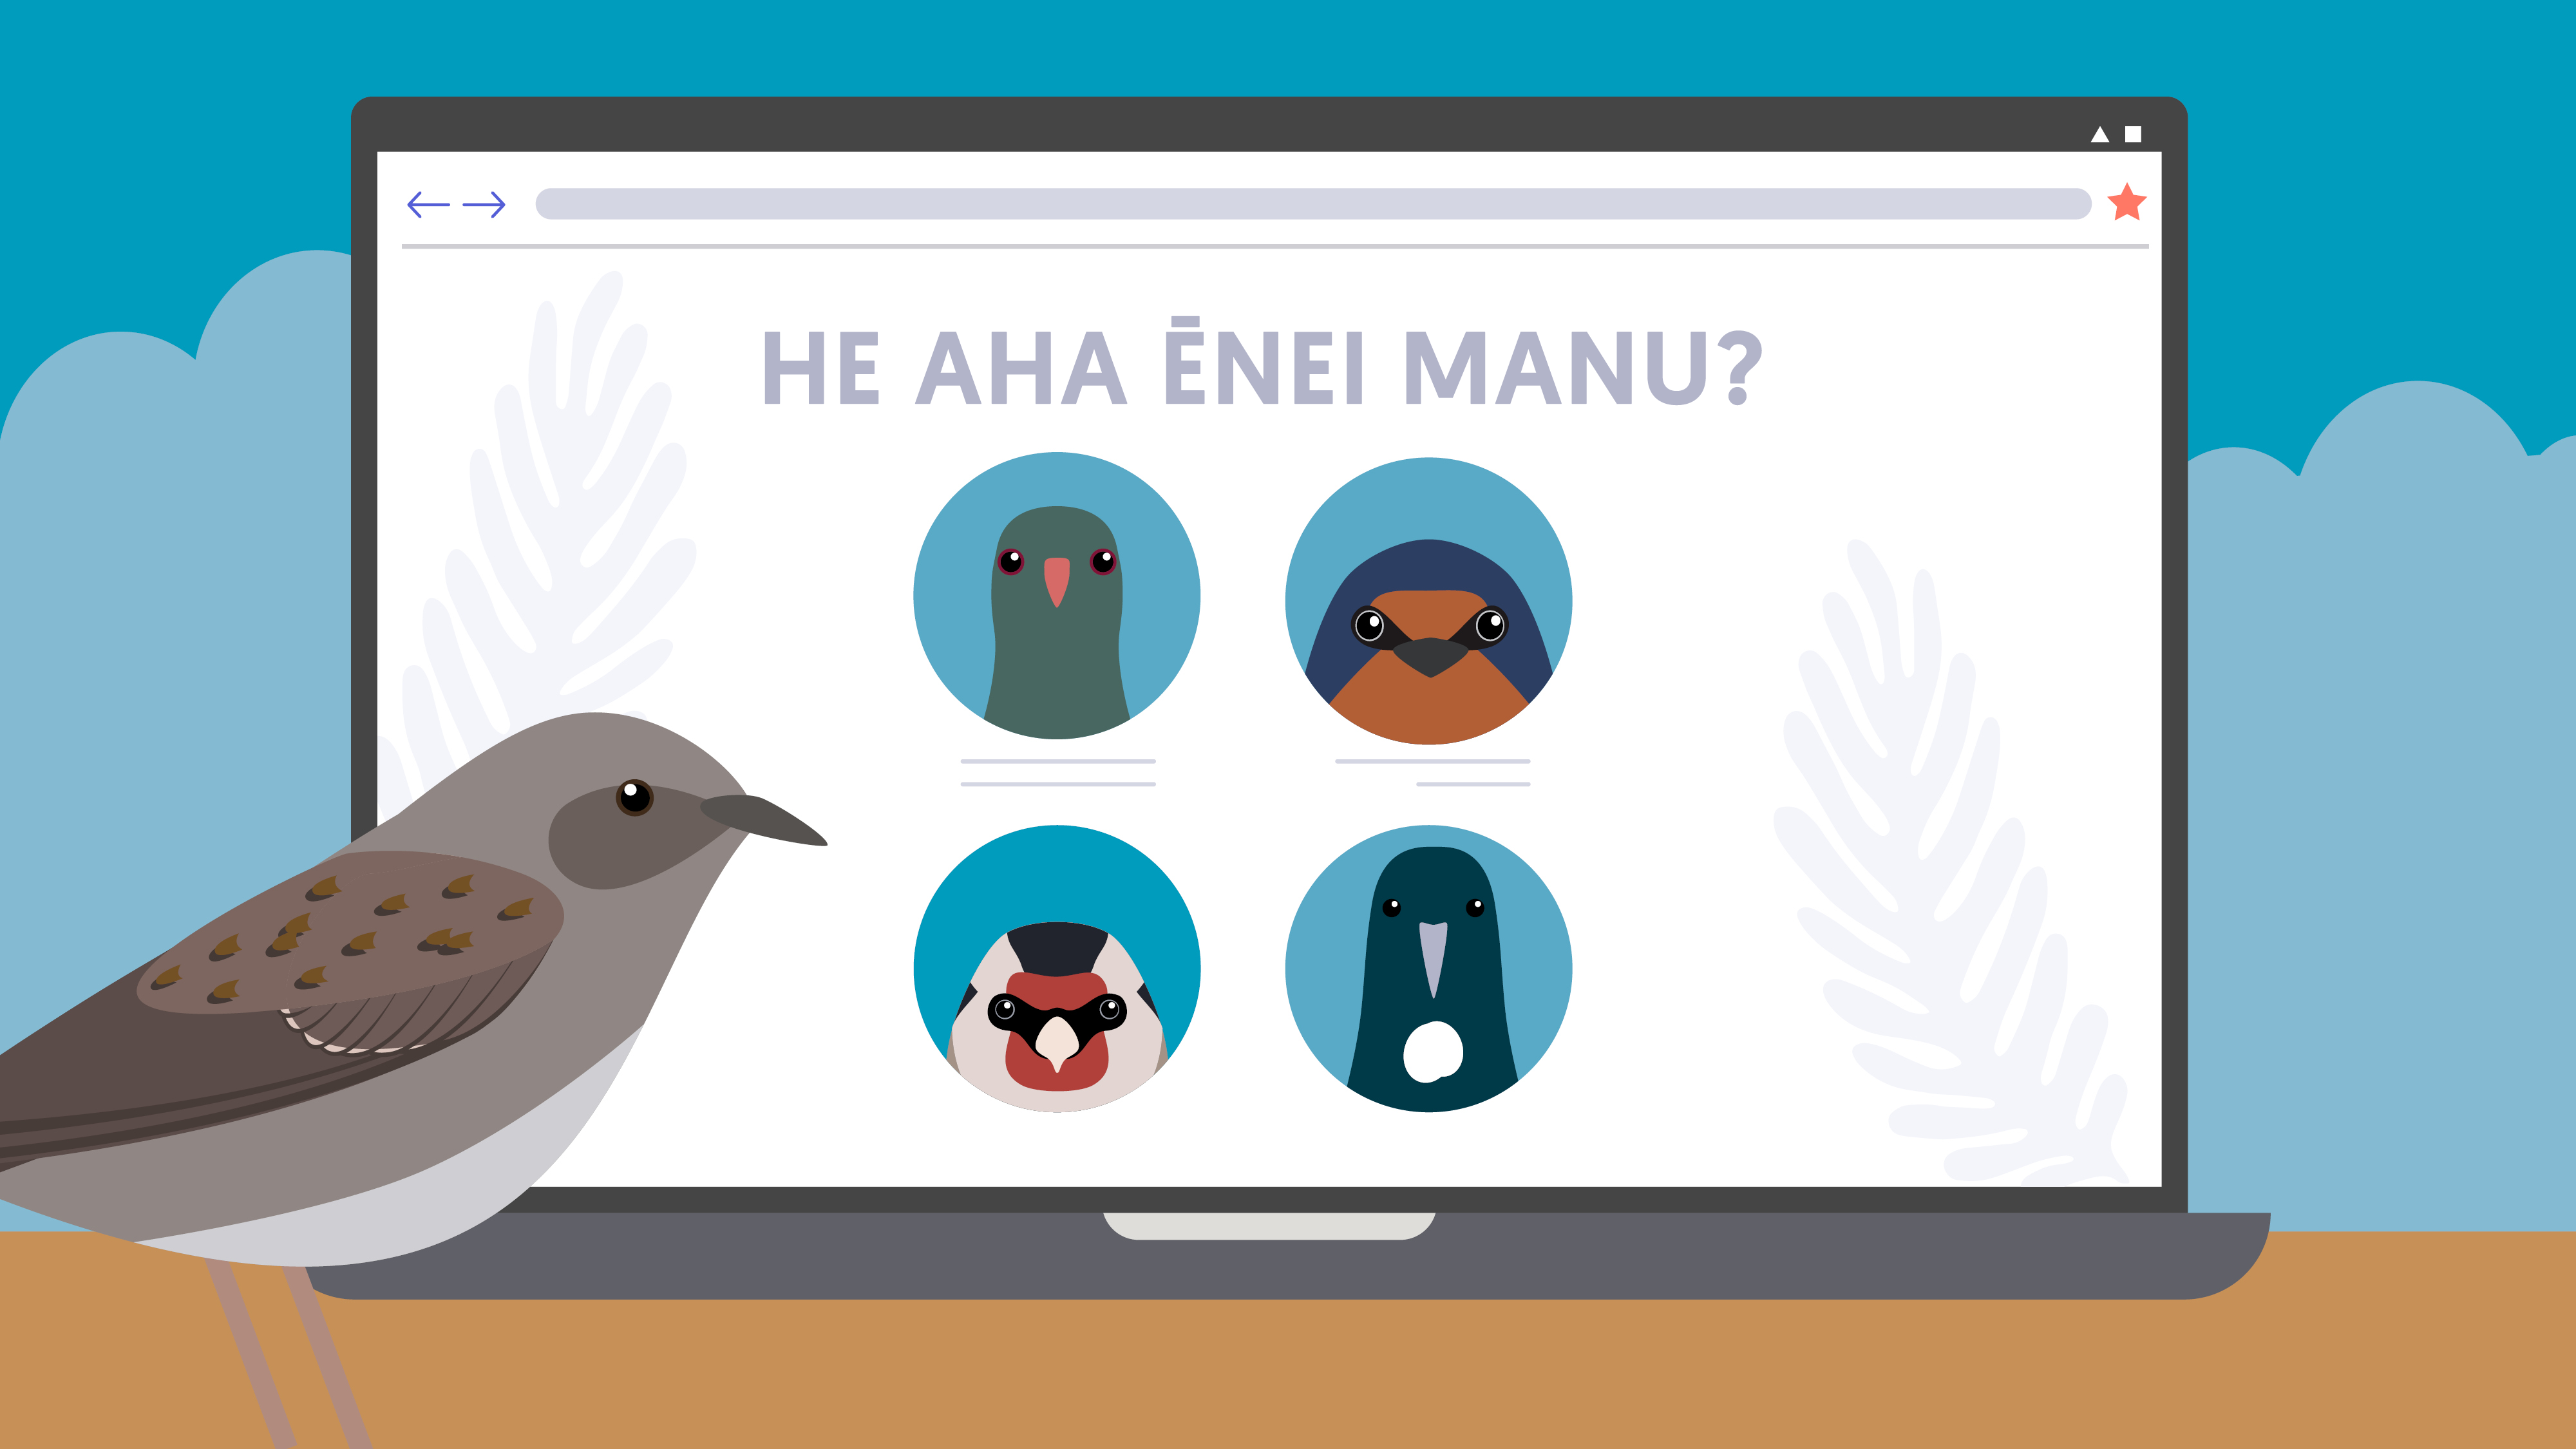 Graphic: He aha ēnei manu? What bird is this?